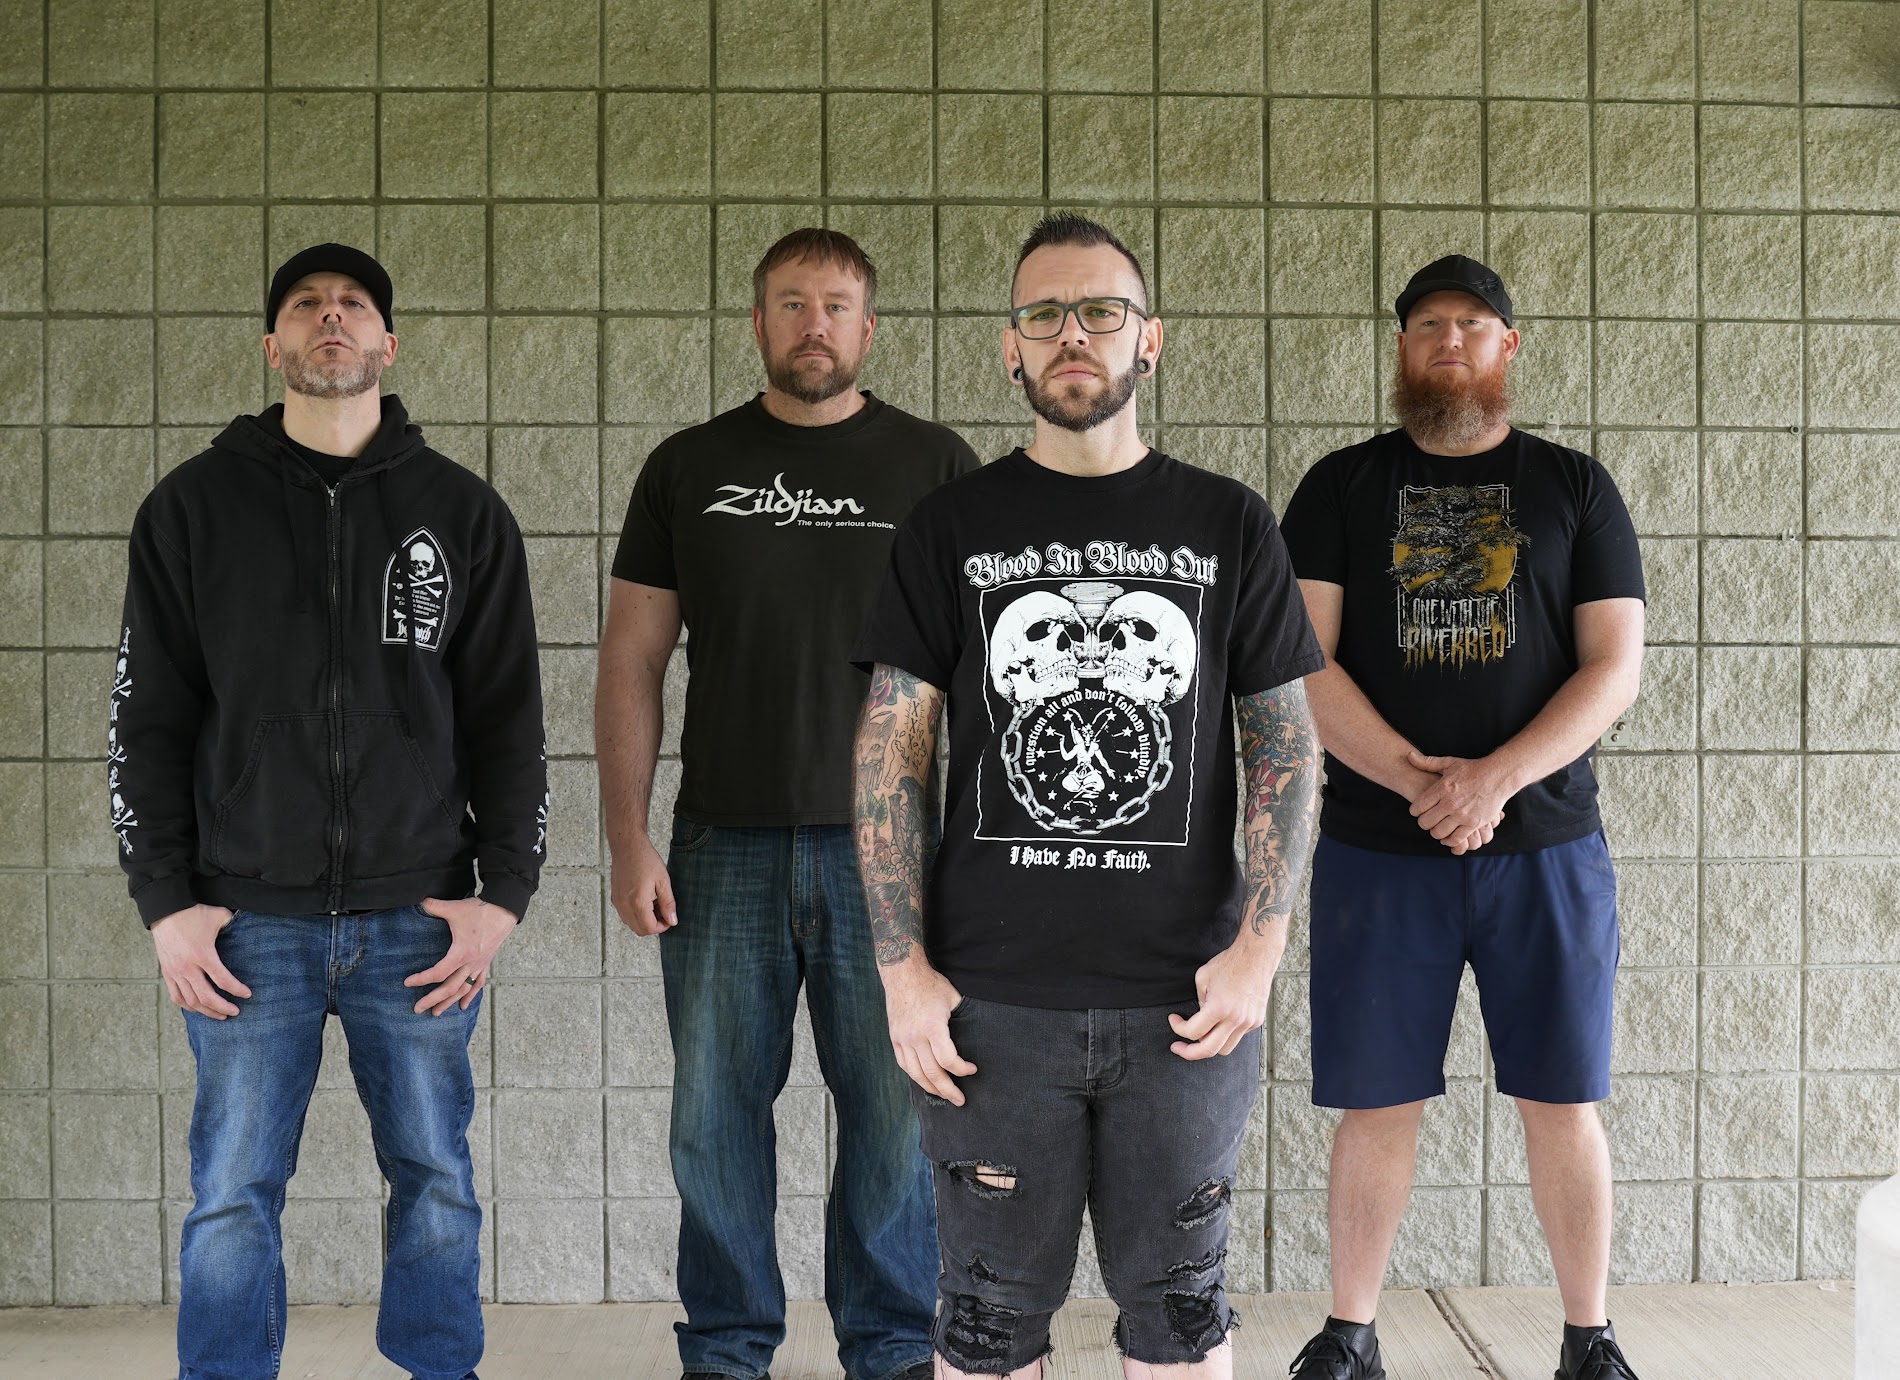 The Witzard Premiere Blackened Metal/Hardcore Band xIron Sharpens Ironx Share